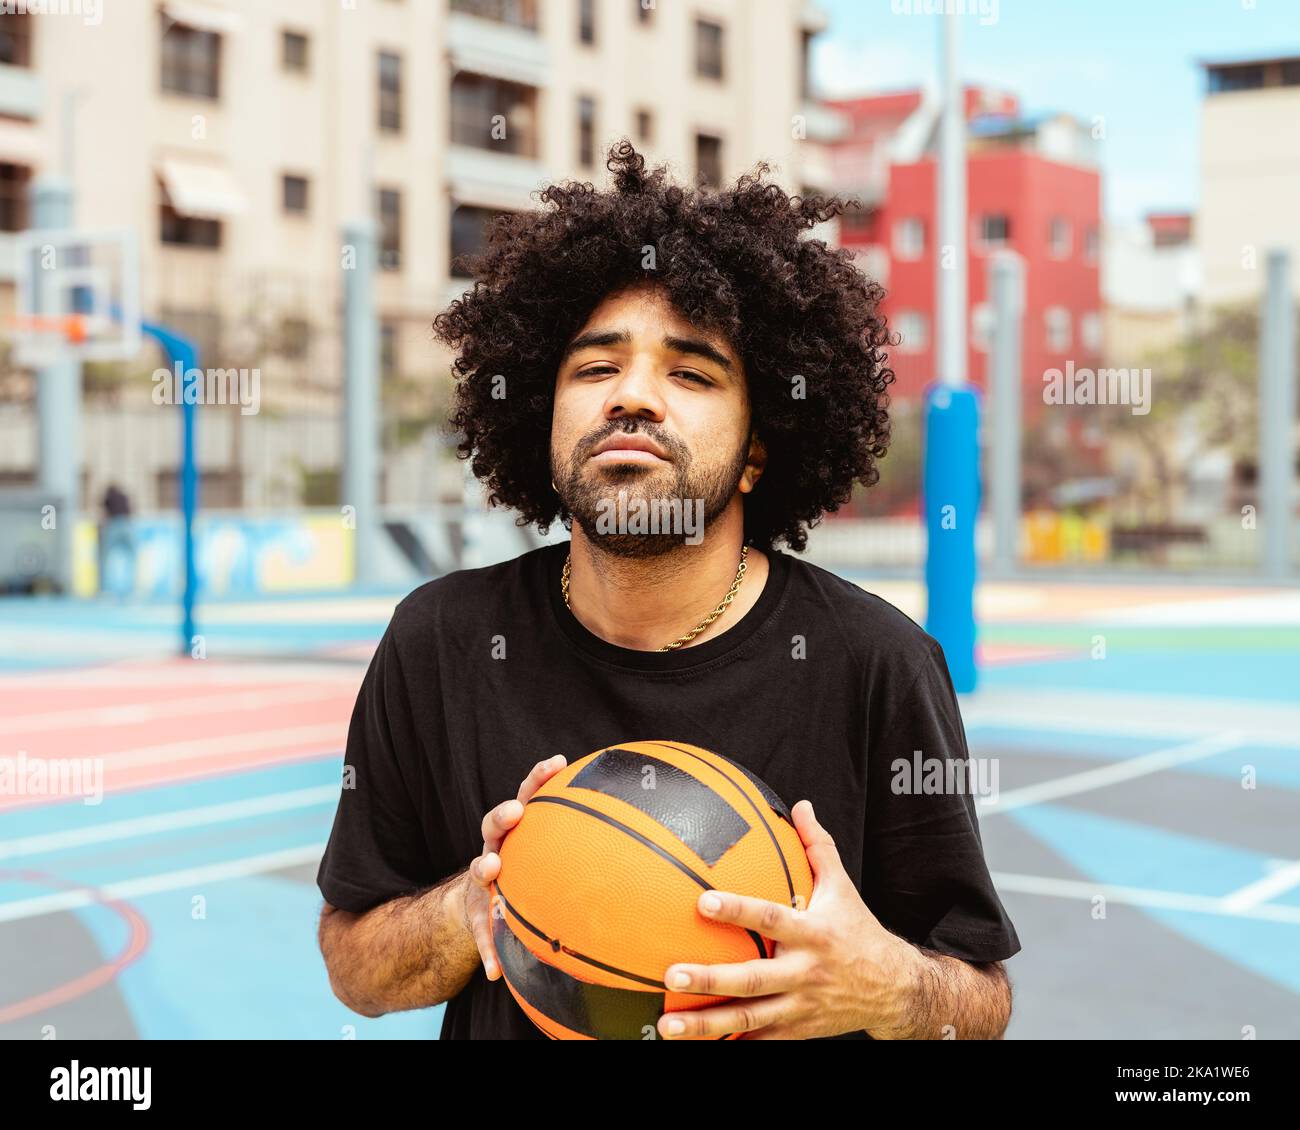 Hispanic Latin man playing basketball outdoor - Urban sport lifestyle concept Stock Photo